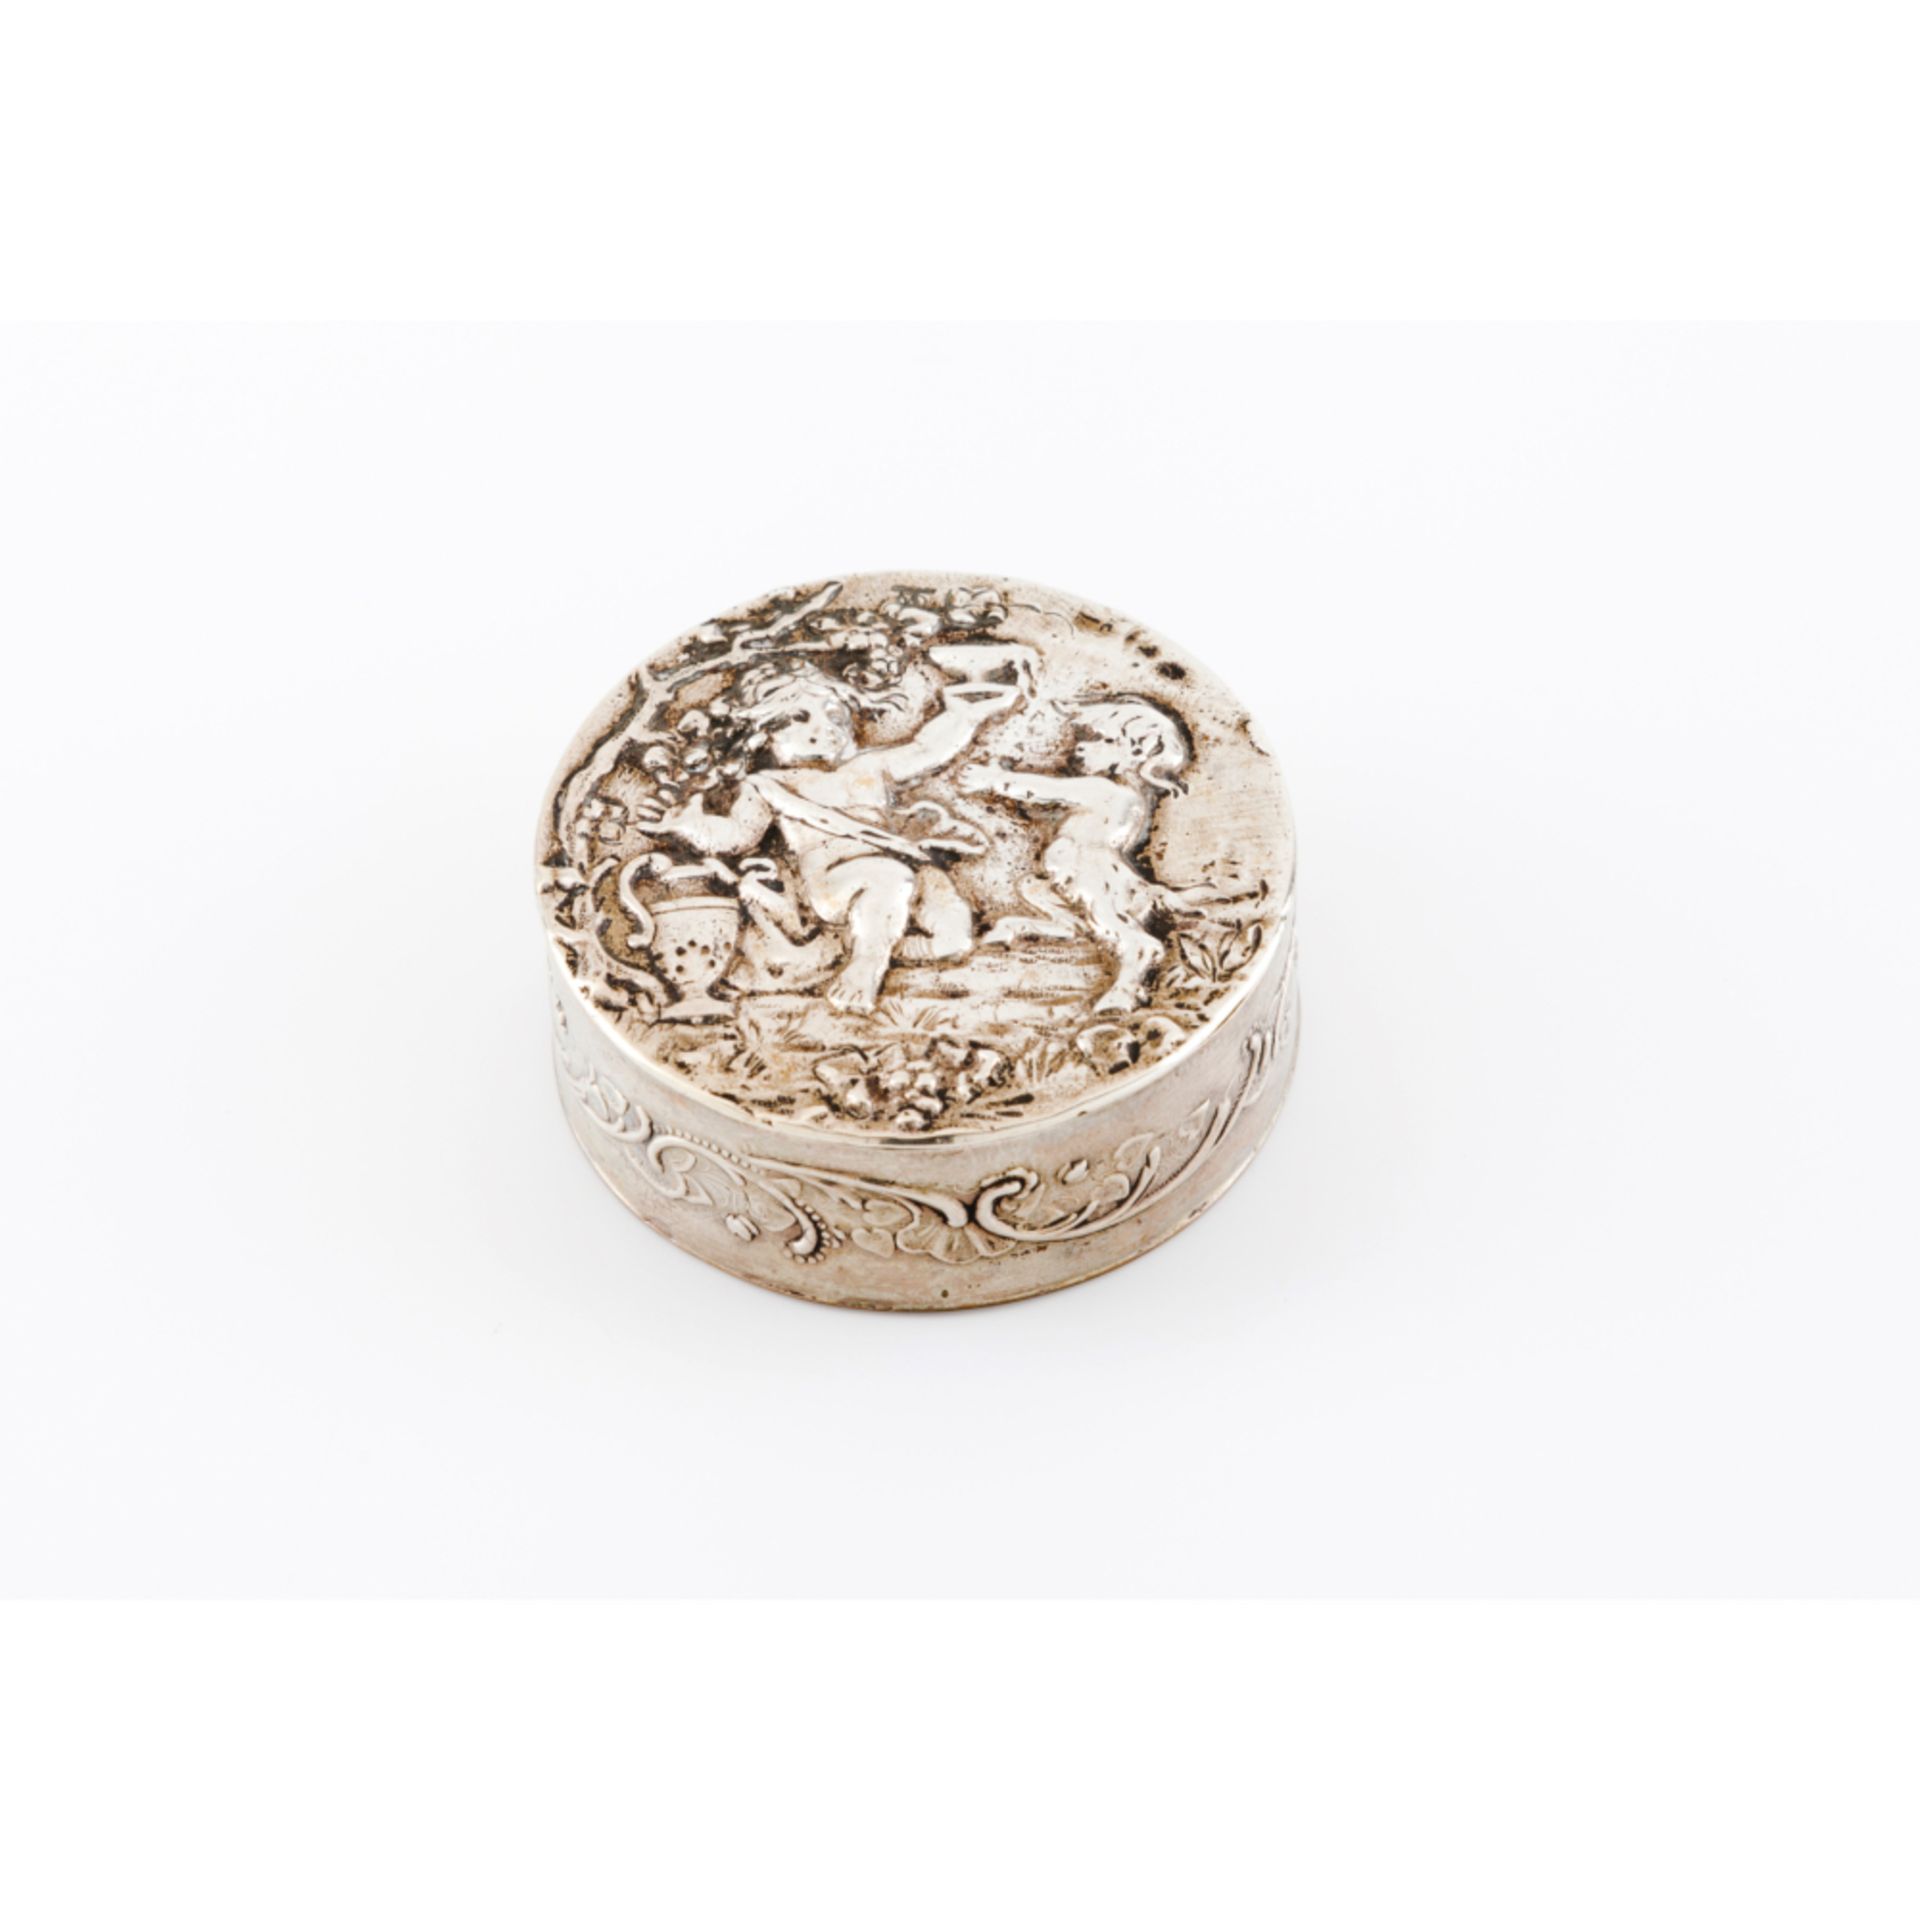 A circular boxGerman silver, 800/1000 Putti reliefs decoration2x5,5 cm45 gr.